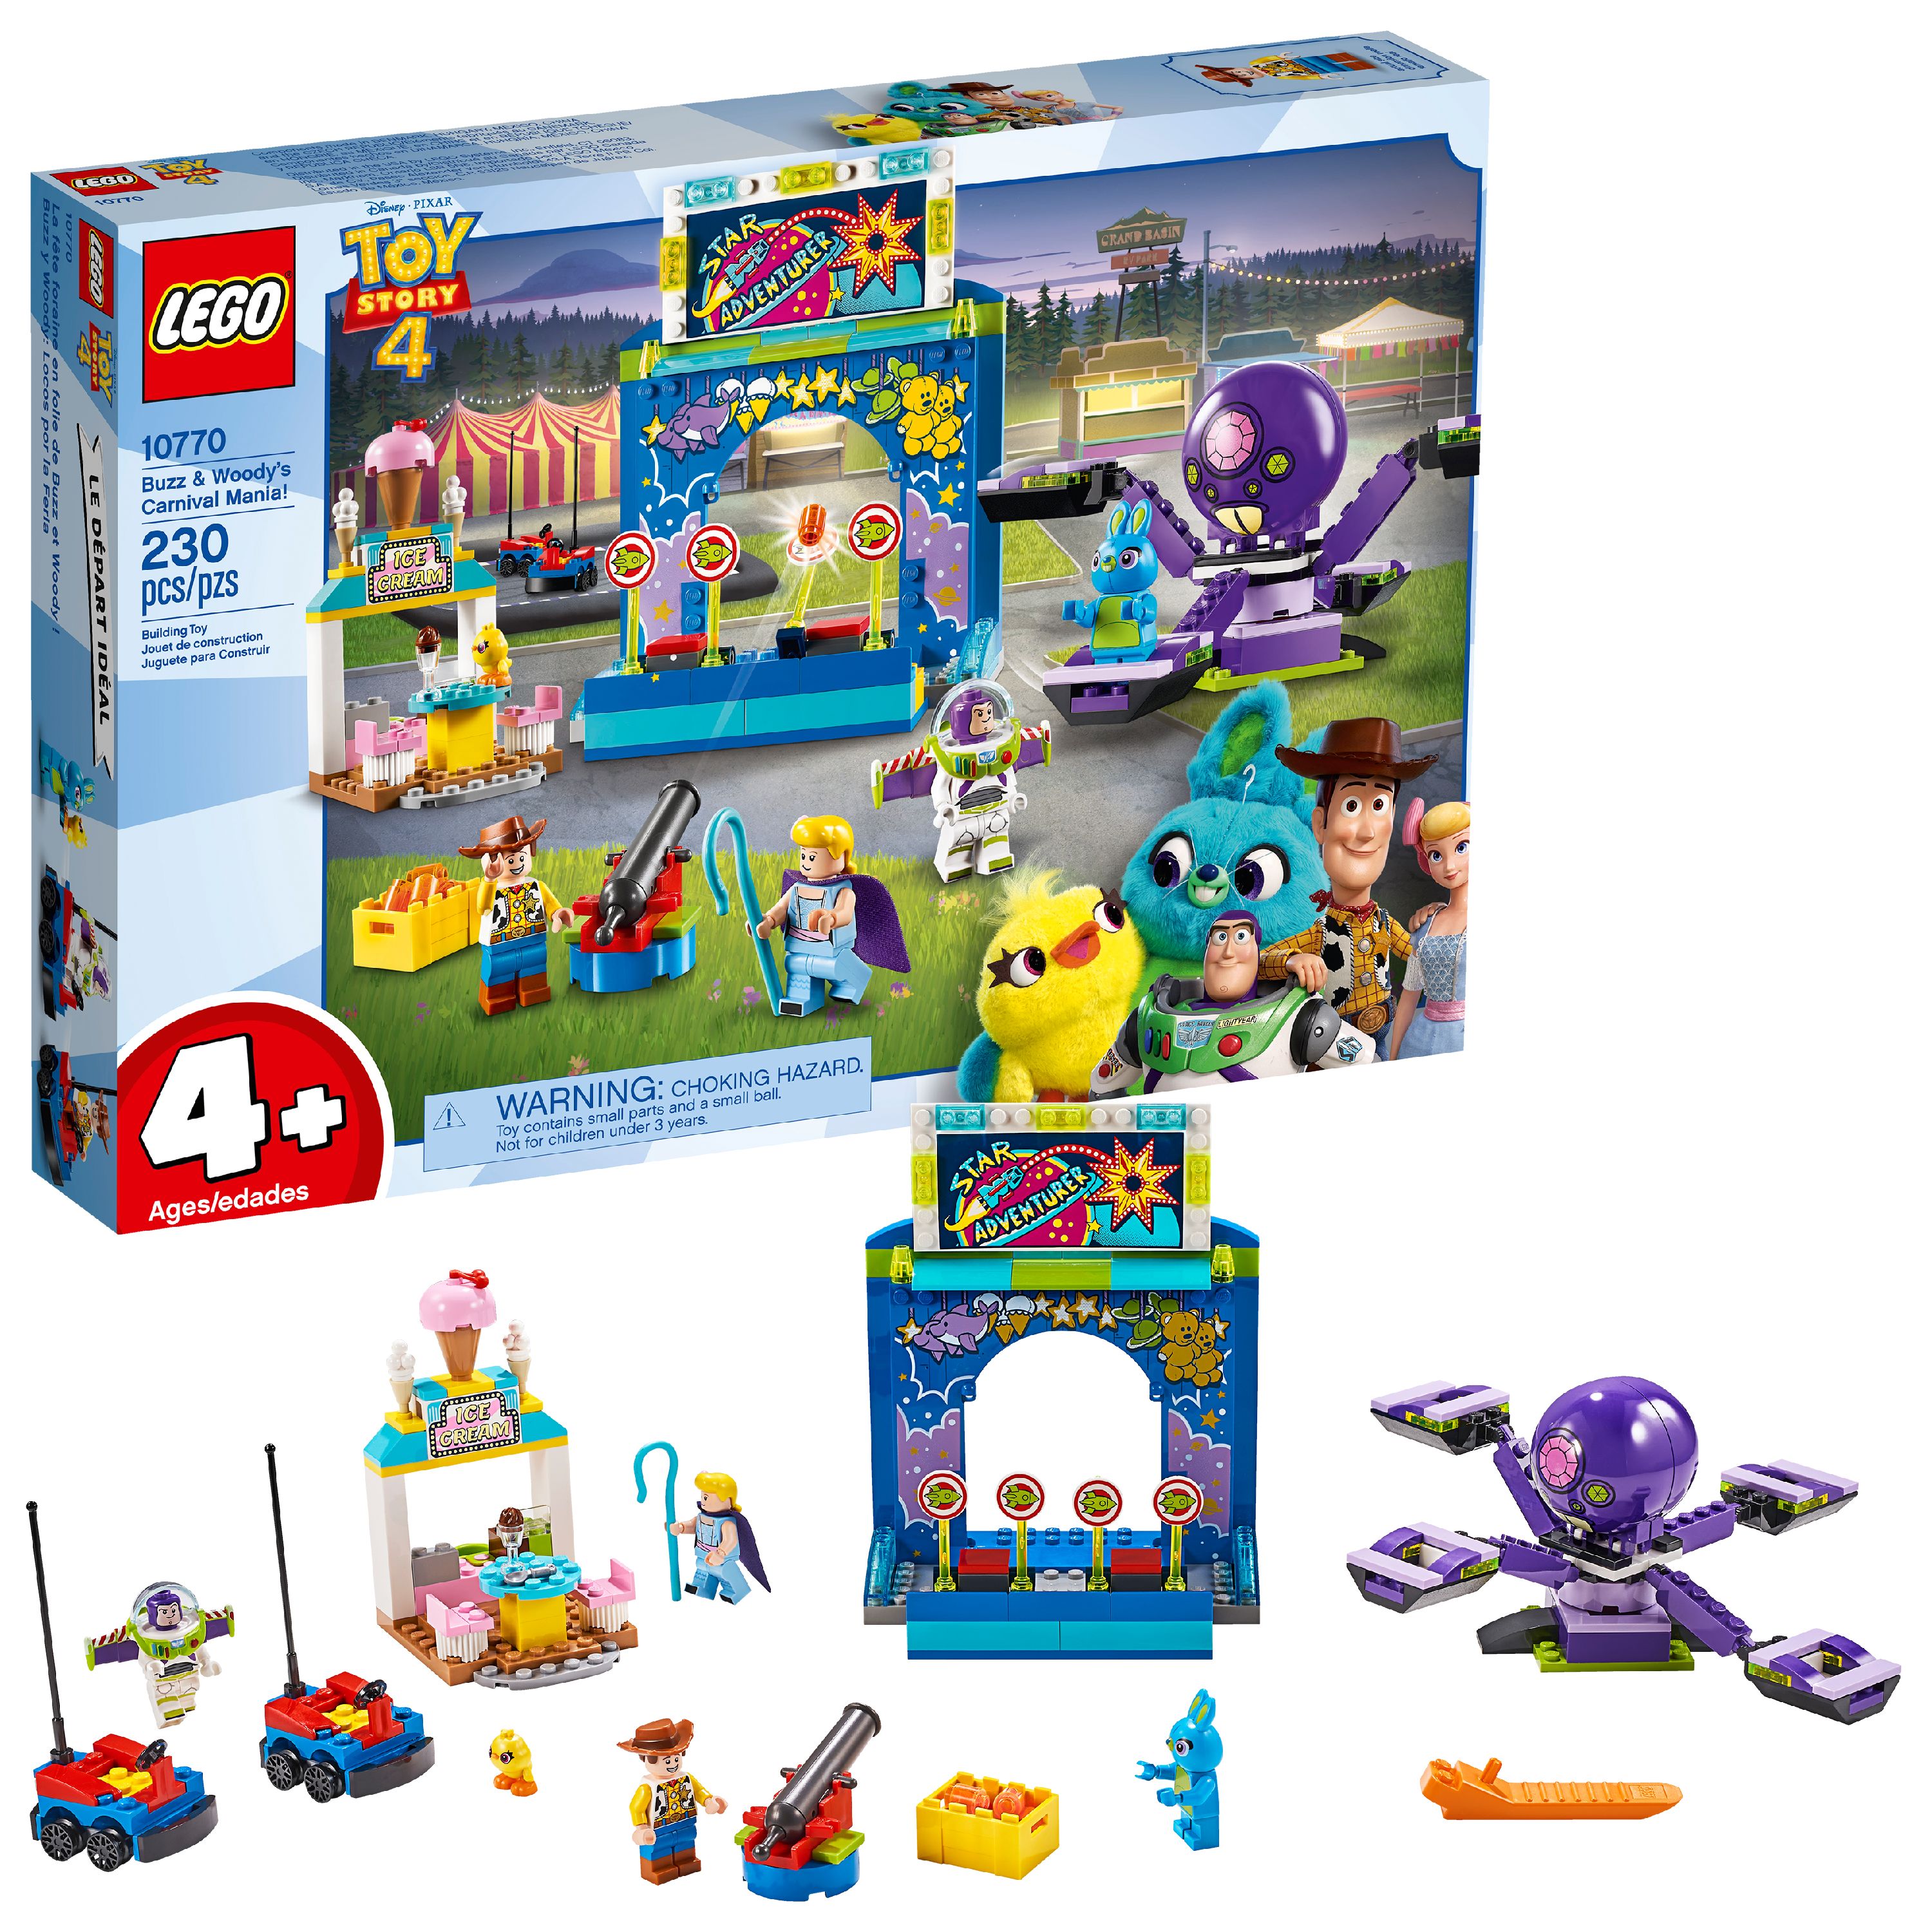 LEGO Disney Pixar’s Toy Story 4 Buzz & Woody’s Carnival Mania 10770 - image 1 of 8